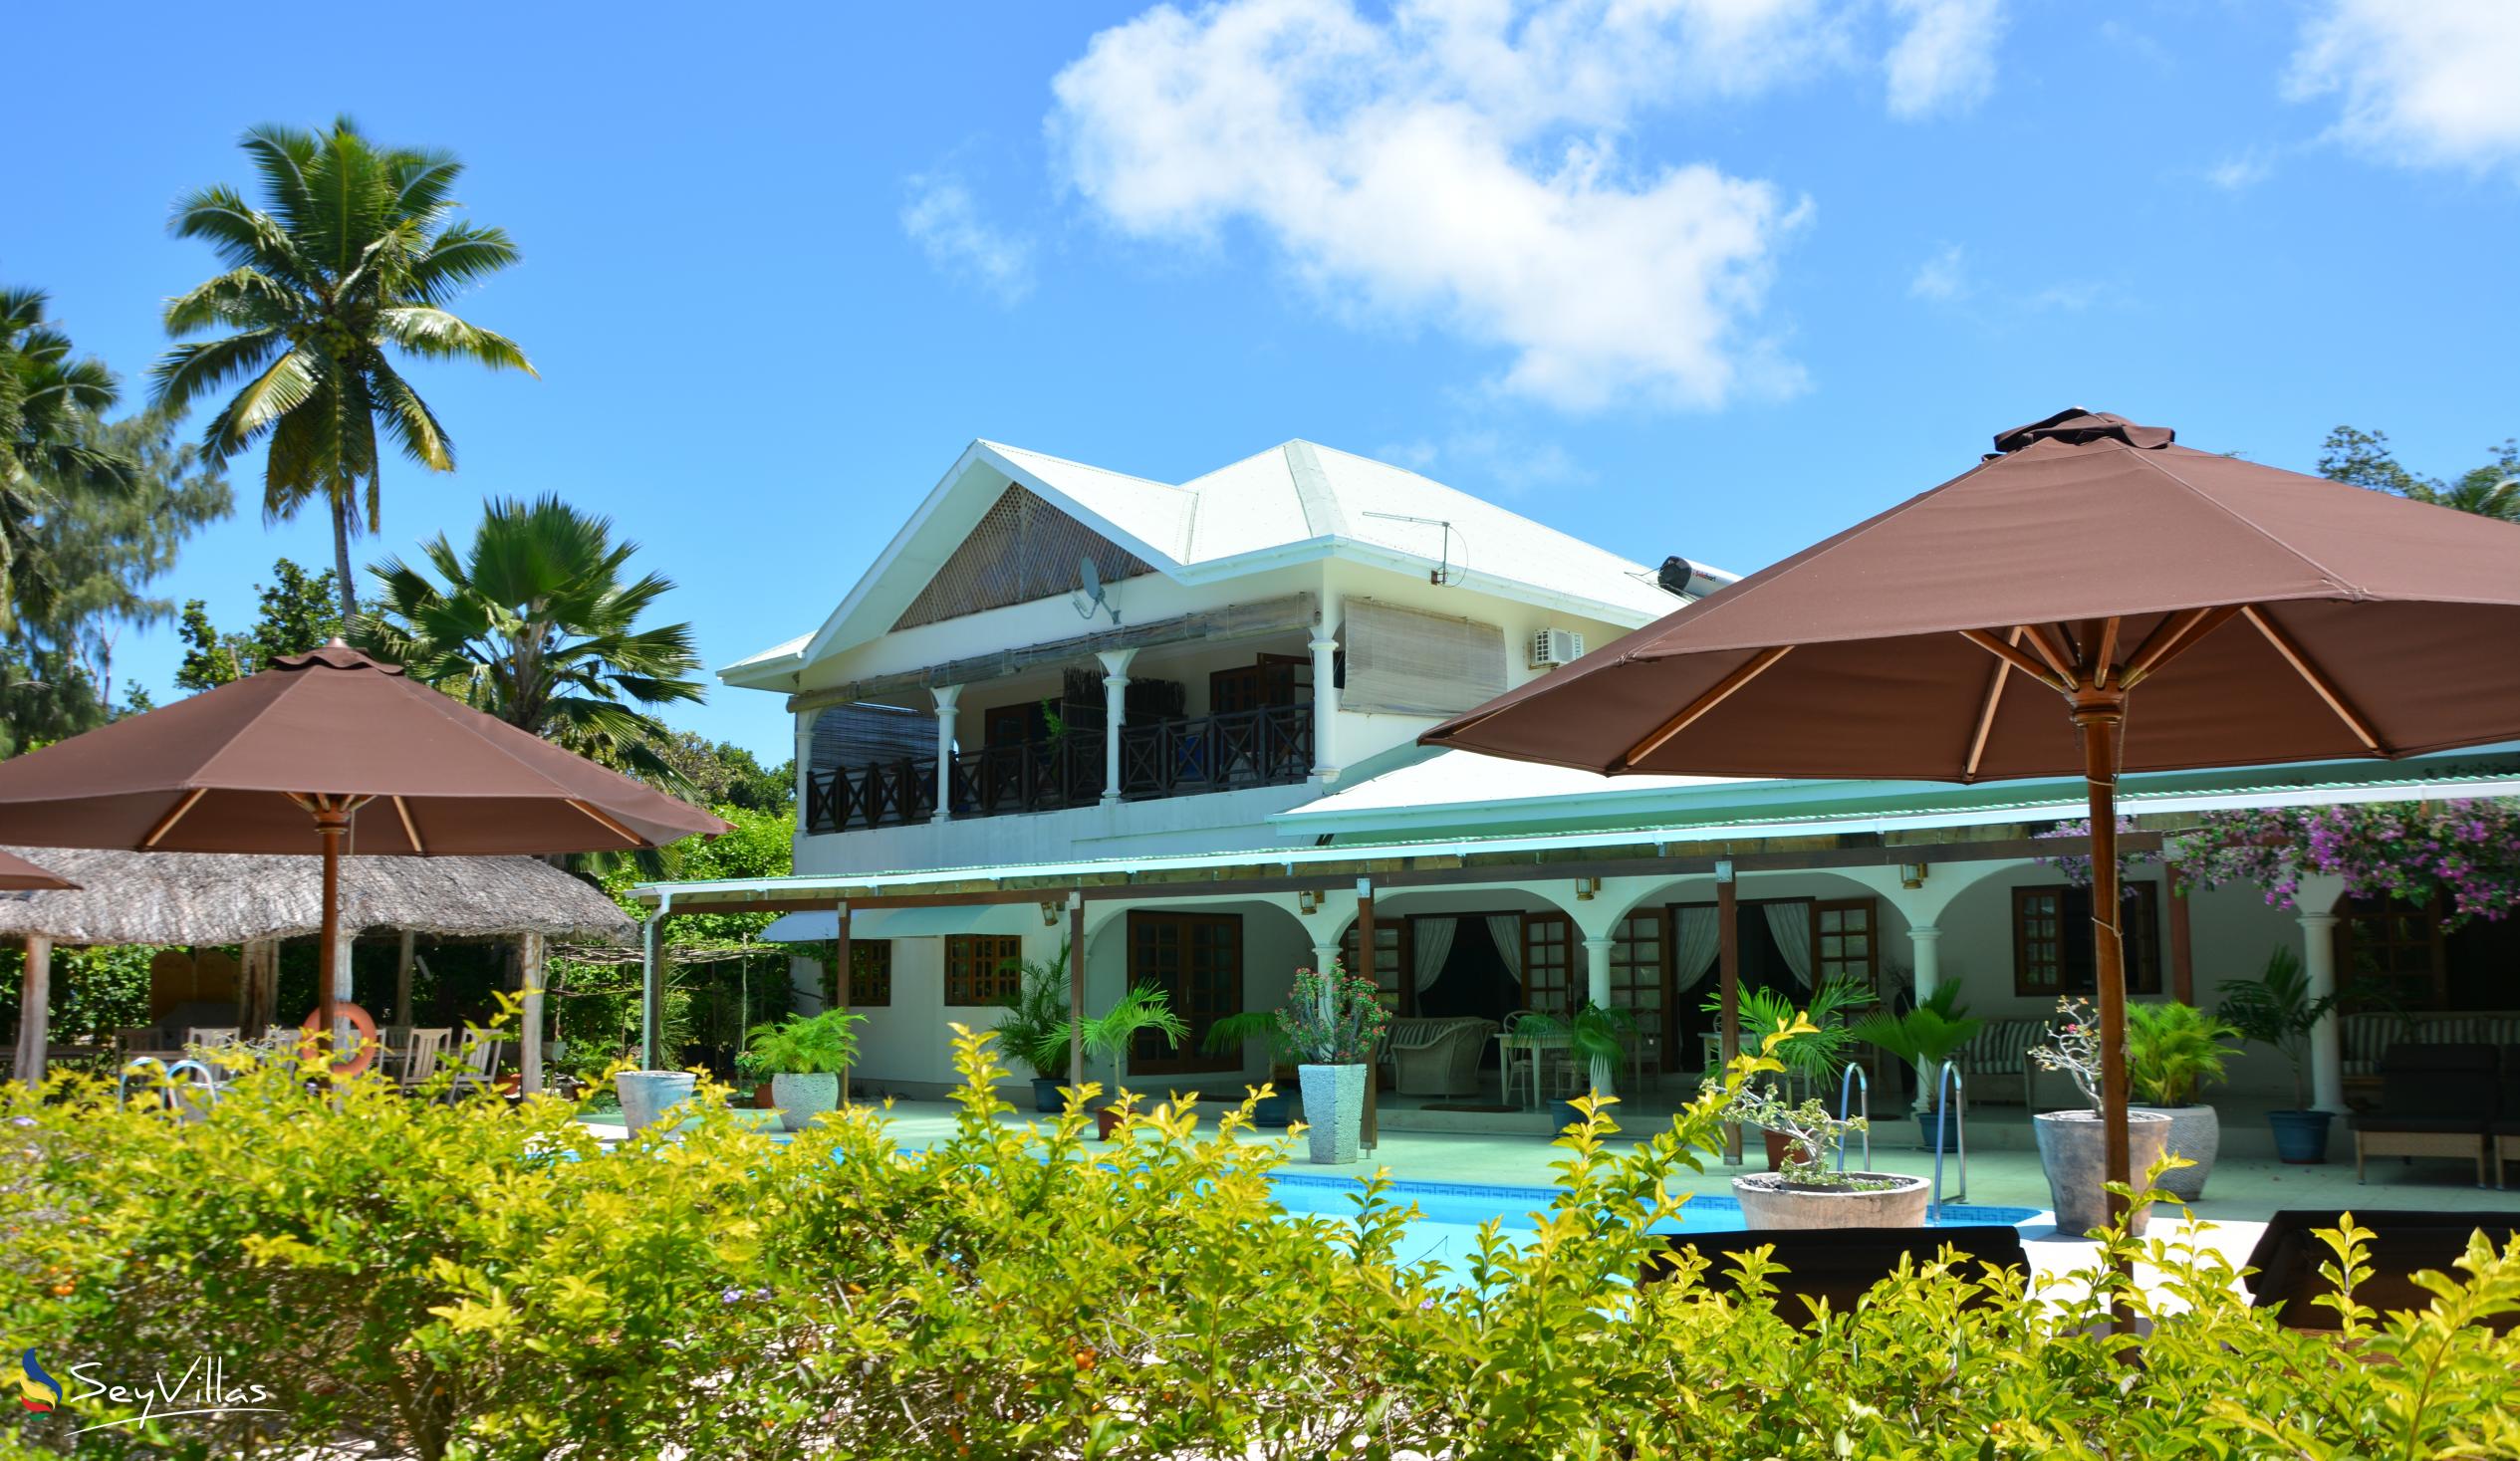 Photo 2: Villa de Cerf - Outdoor area - Cerf Island (Seychelles)